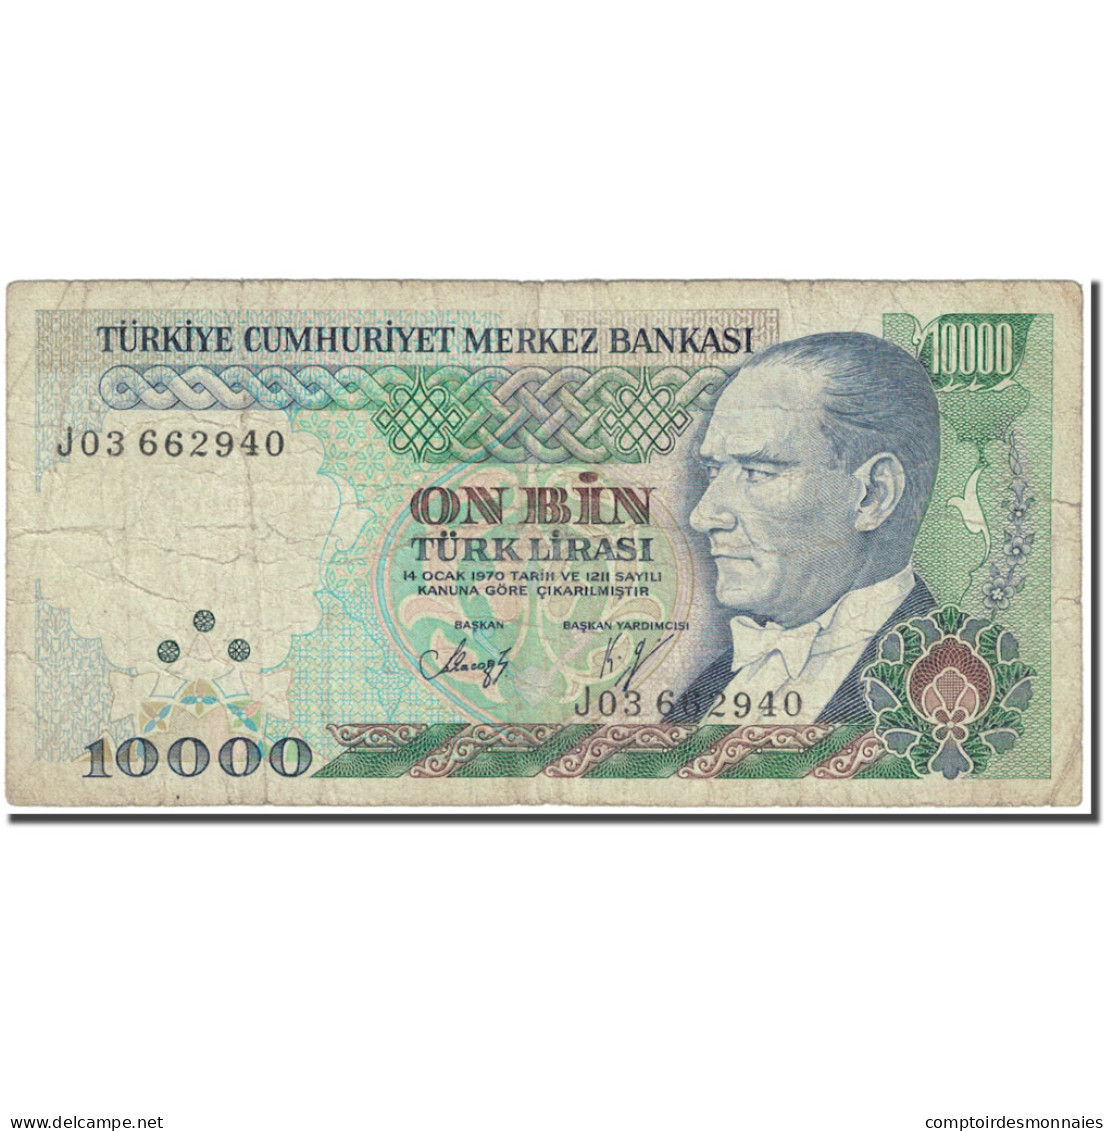 Billet, Turquie, 10,000 Lira, 1989, Old Date : 14.01.1970 (1989)., KM:200, TB - Türkei